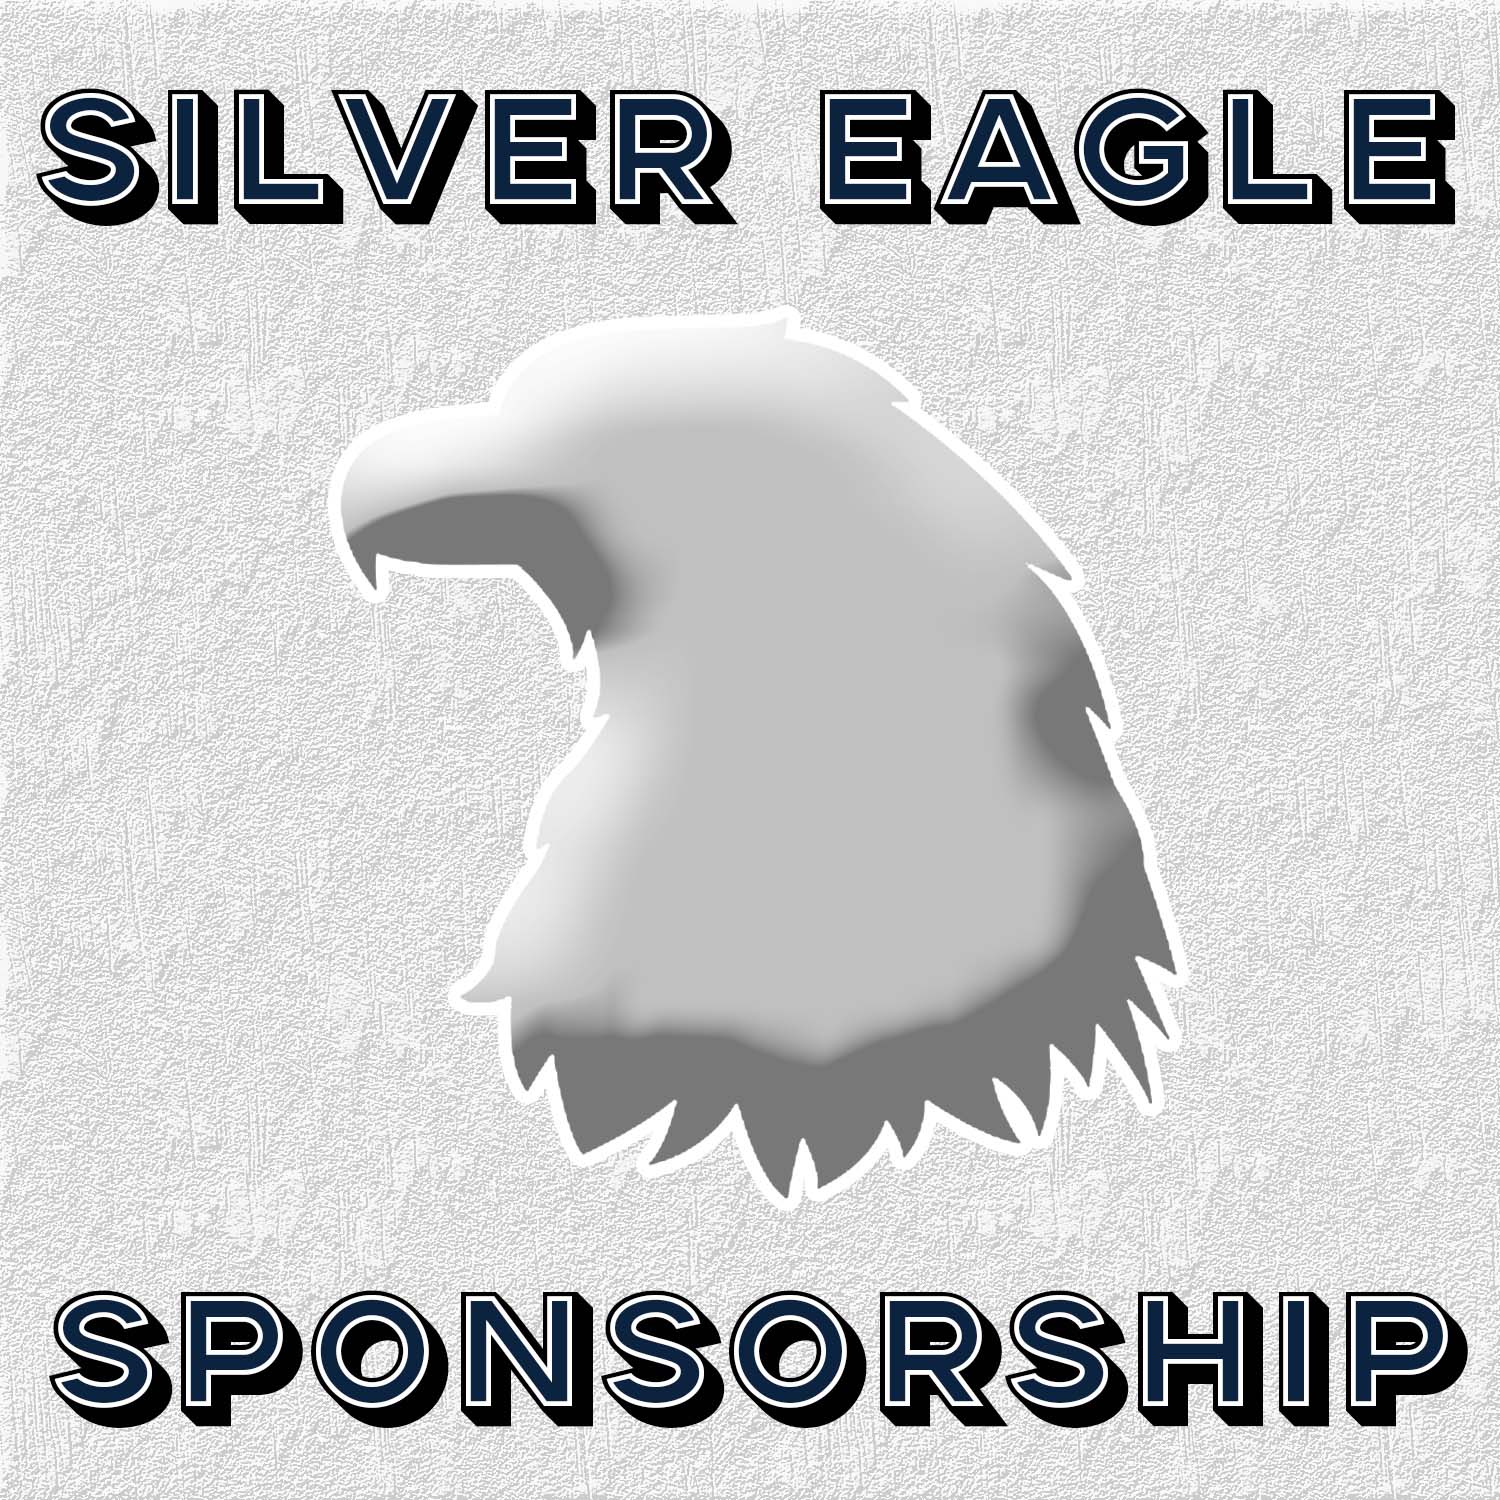 Silver Eagle Sponsorship